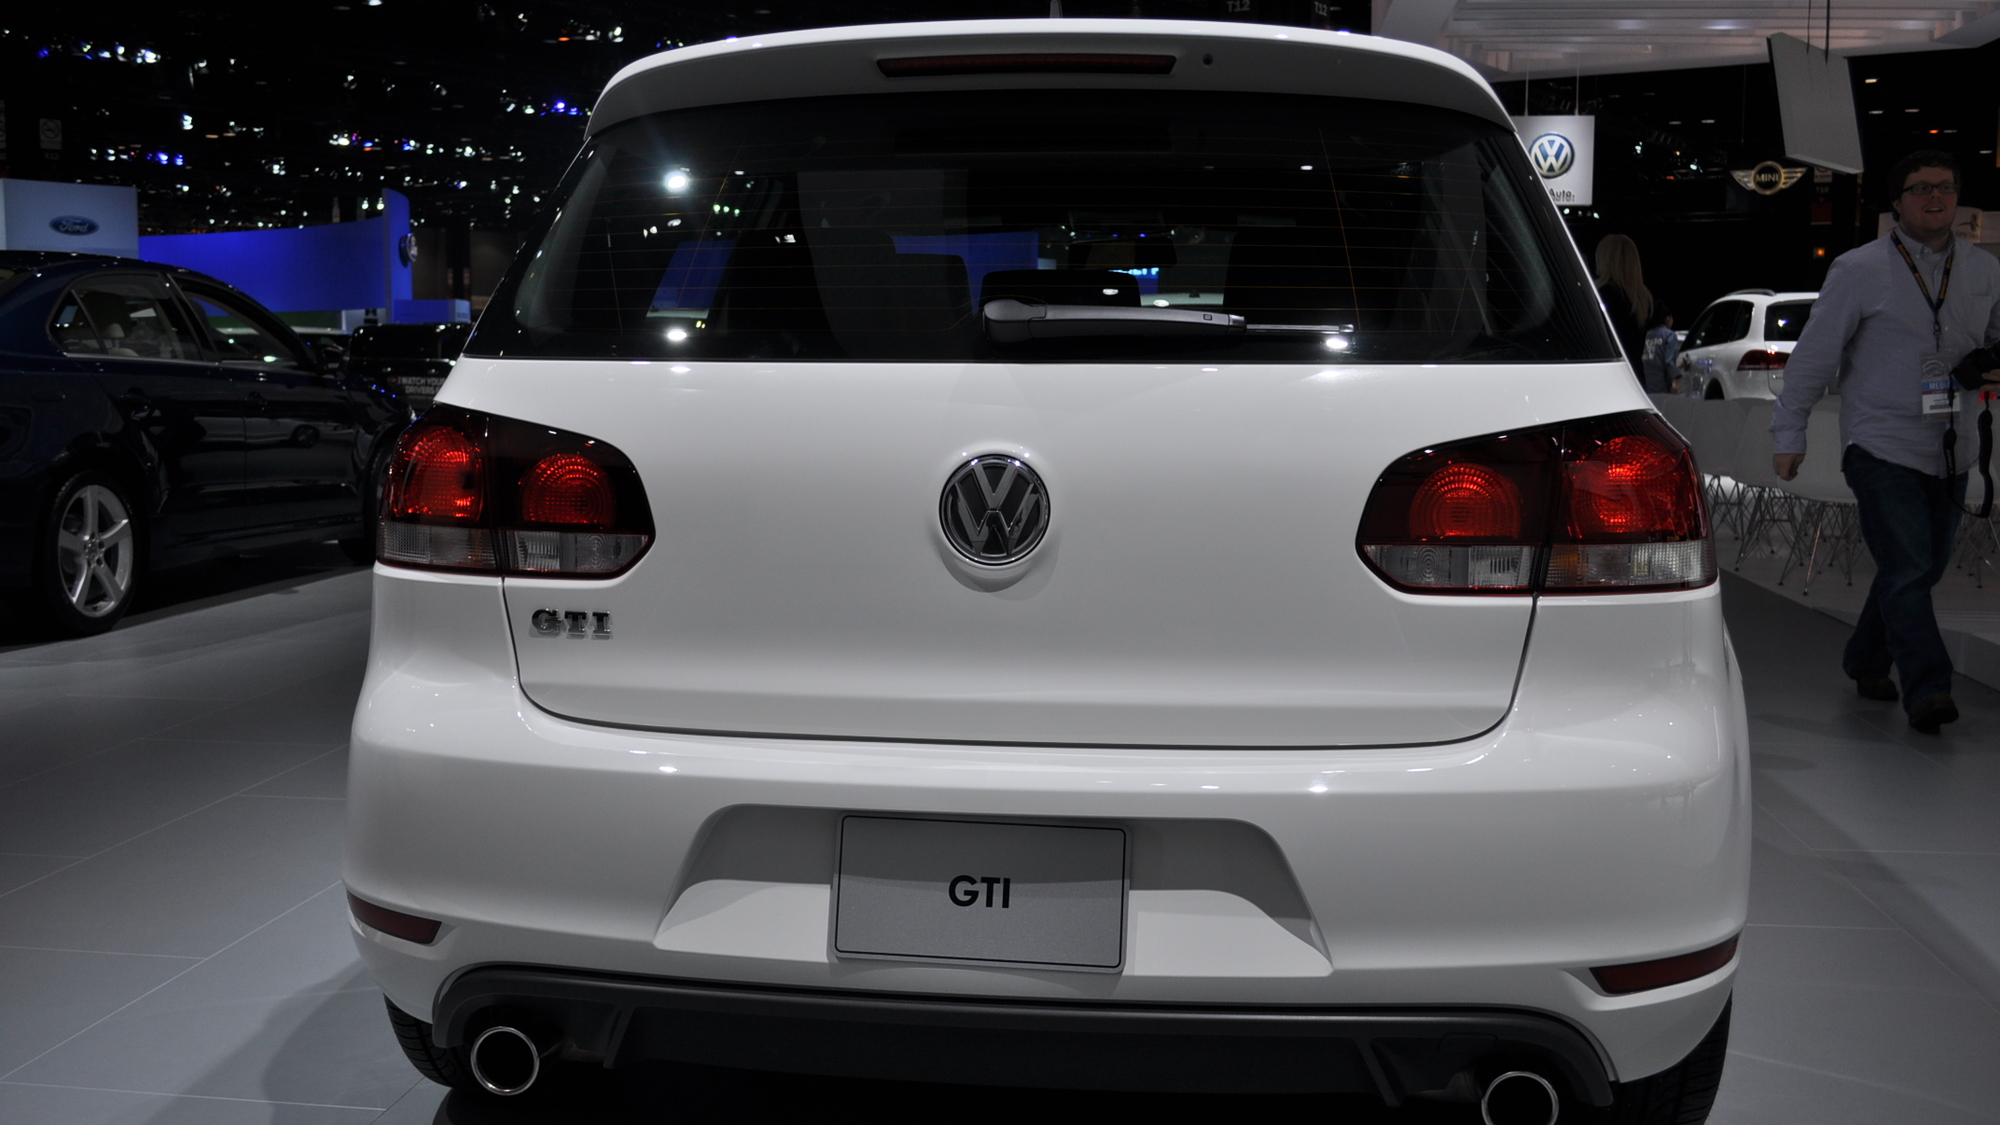 2013 Volkswagen GTI Driver's Edition Live Photos